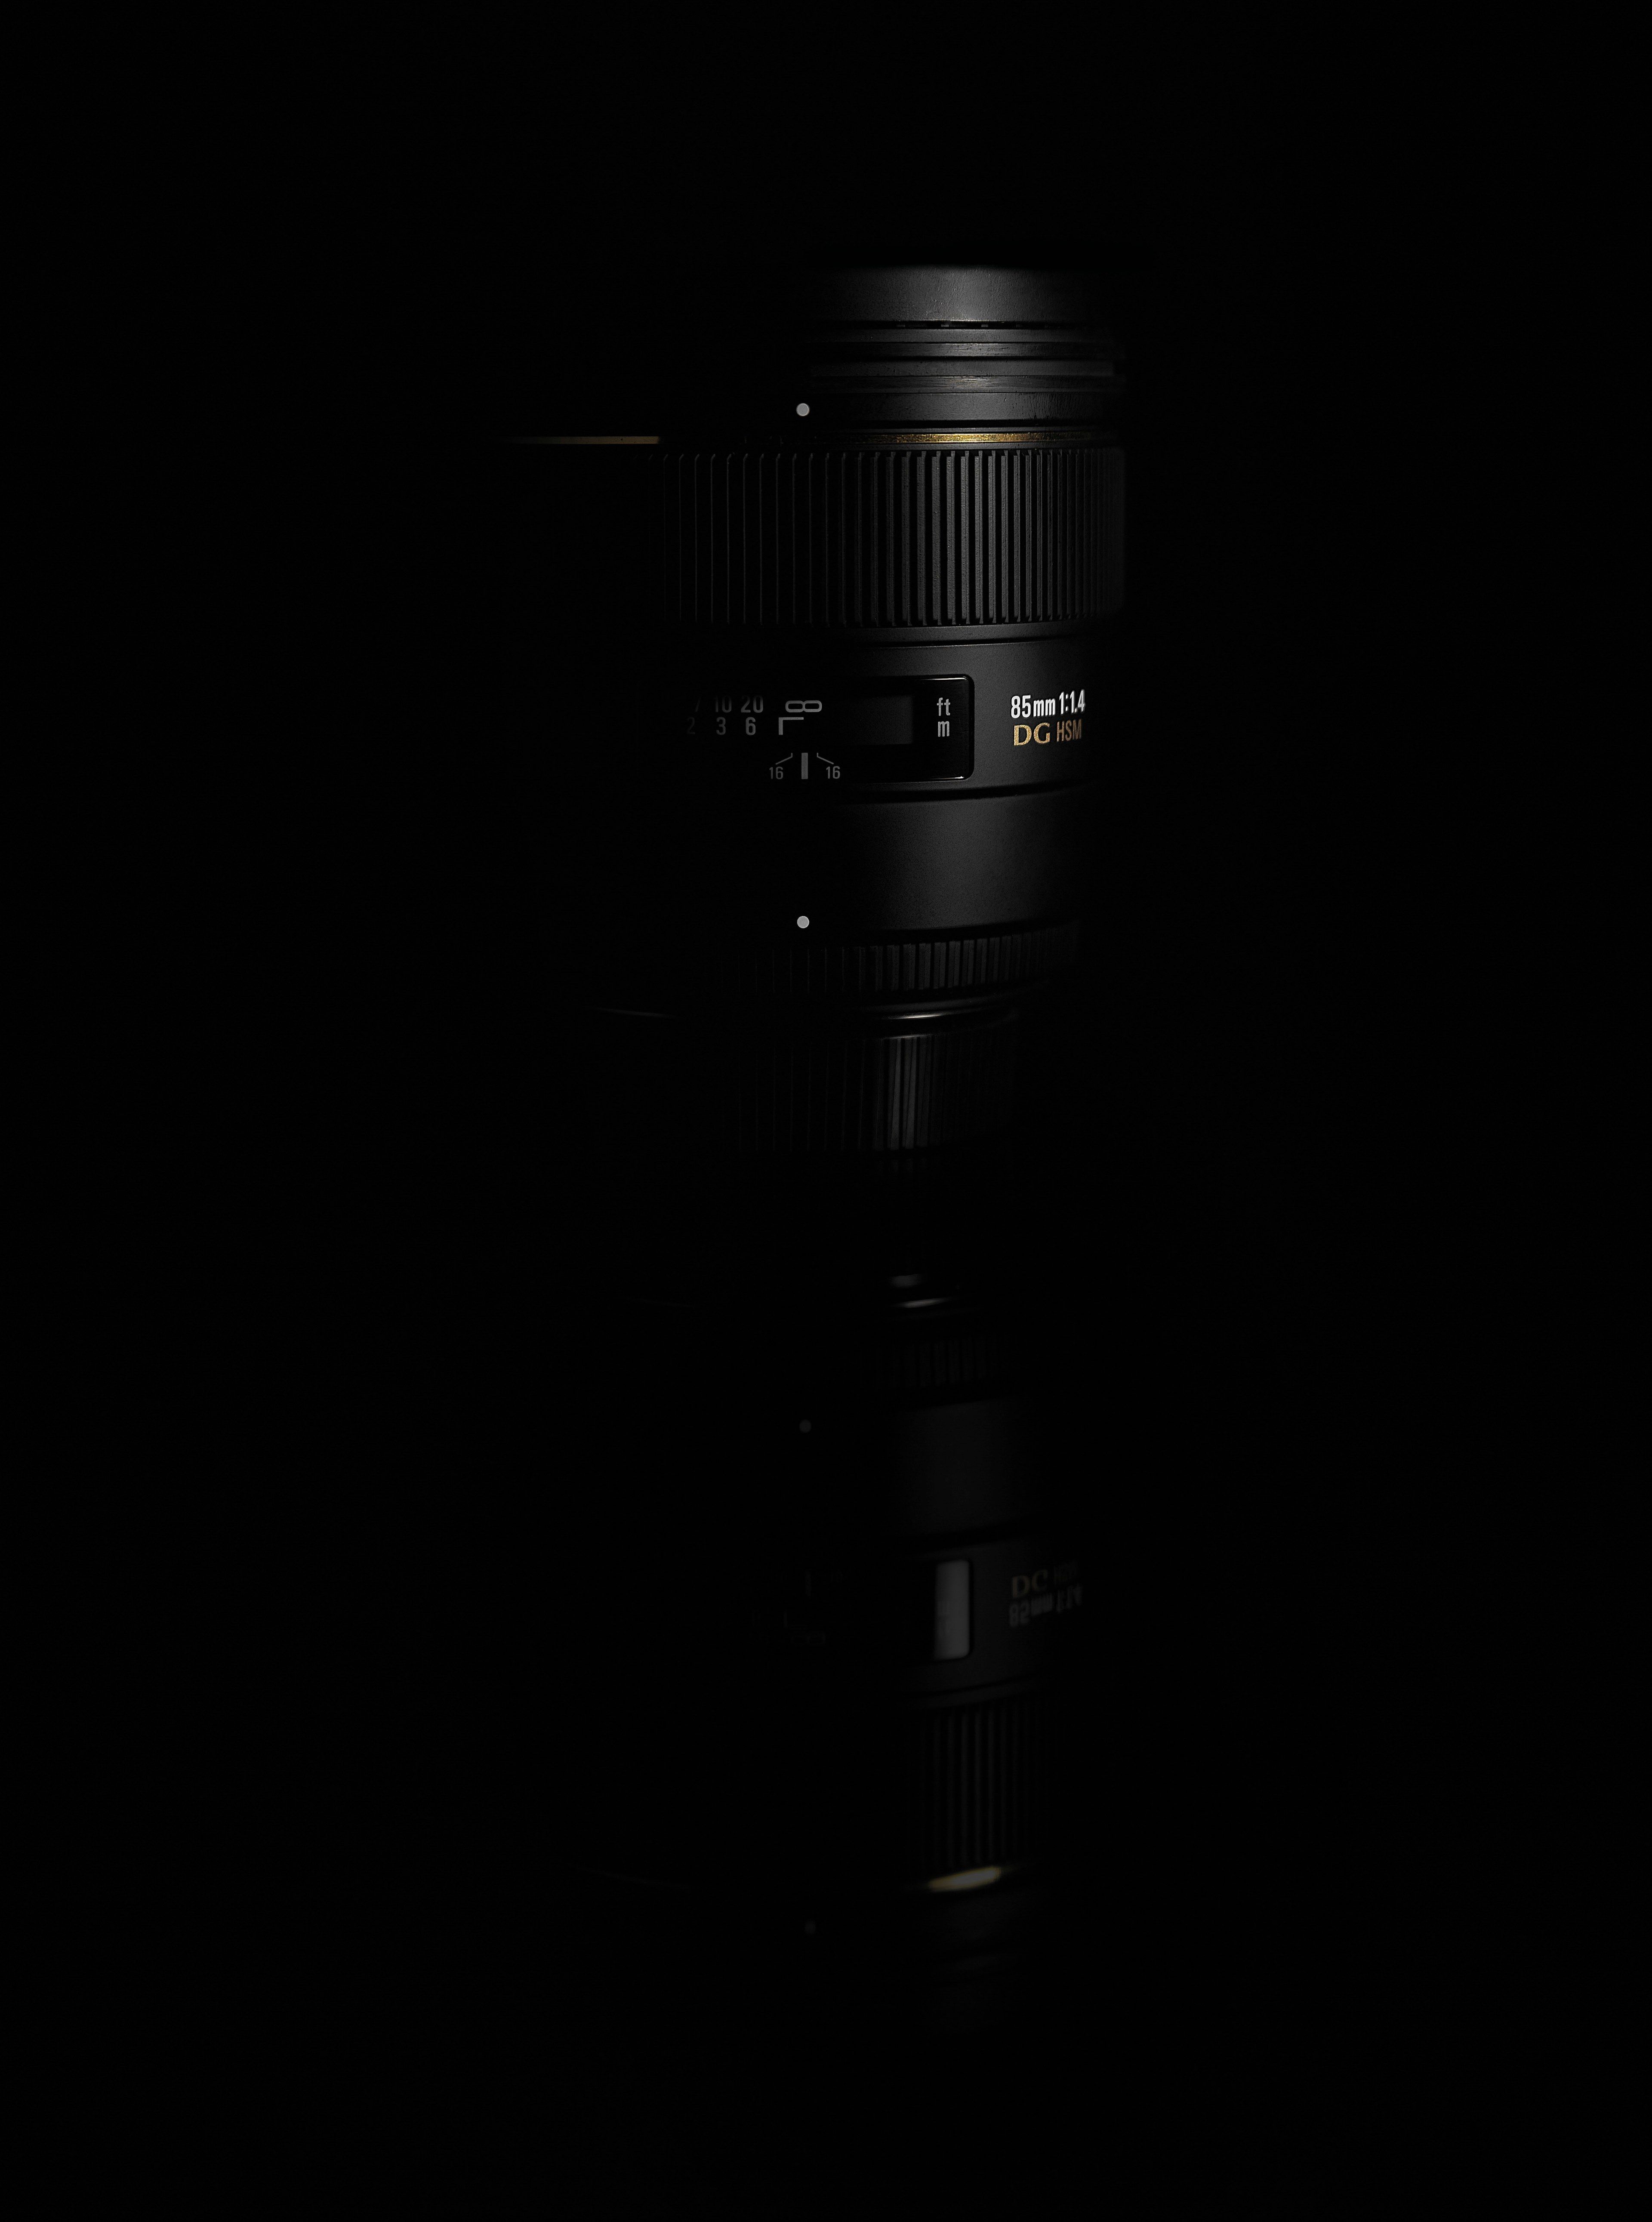 Wallpaper / black 85mm dslr camera lens on a black